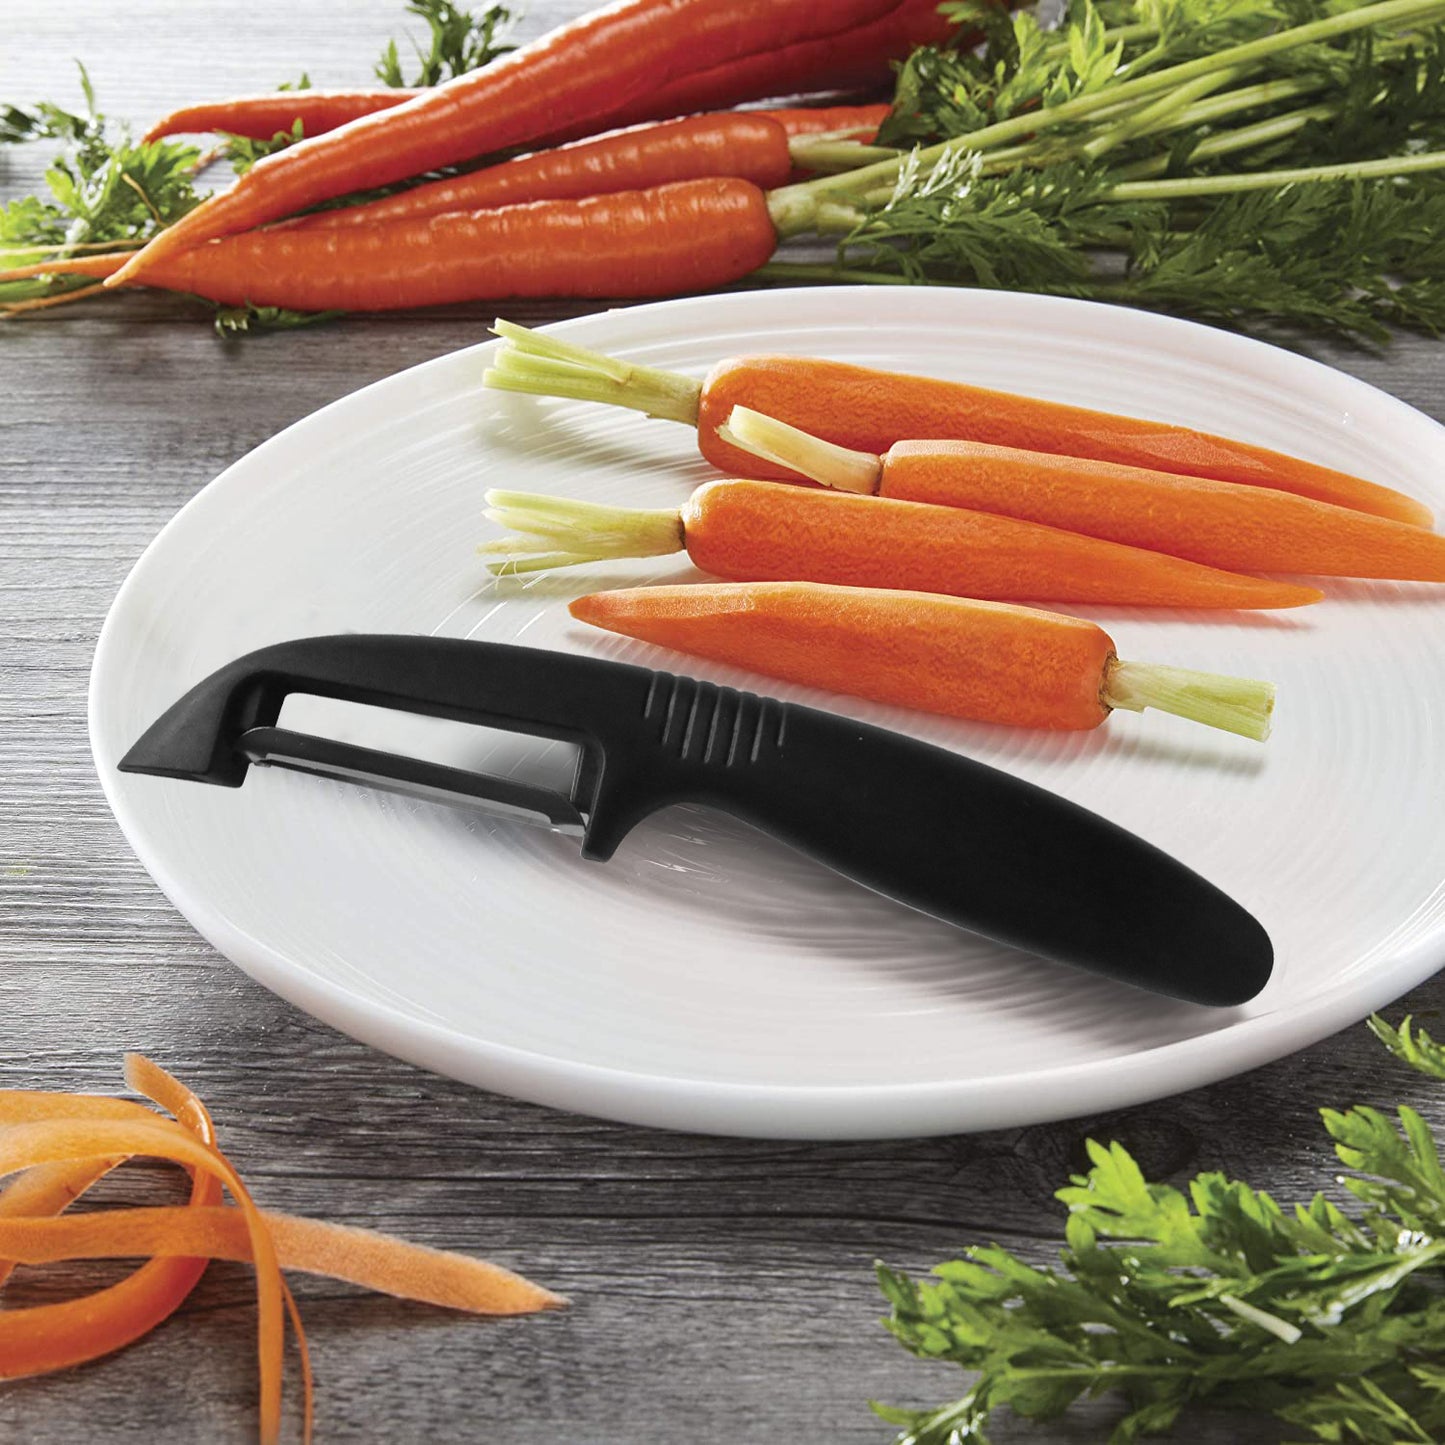 Bene Casa Vegetable Peeler, Stainless Steel Blade, Soft Grip, Dishwash